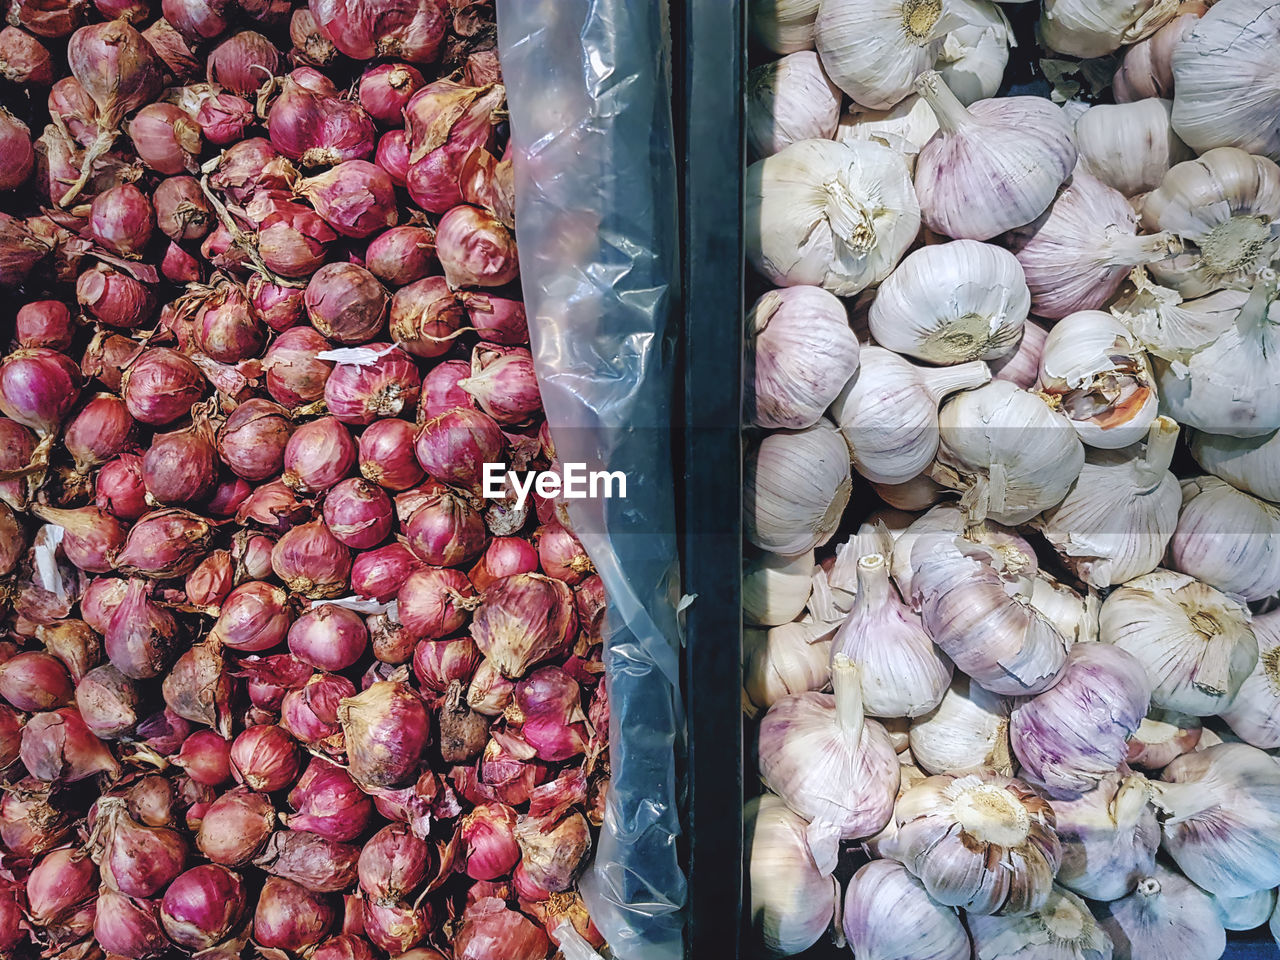 Piles of fresh onion shallots and garlic